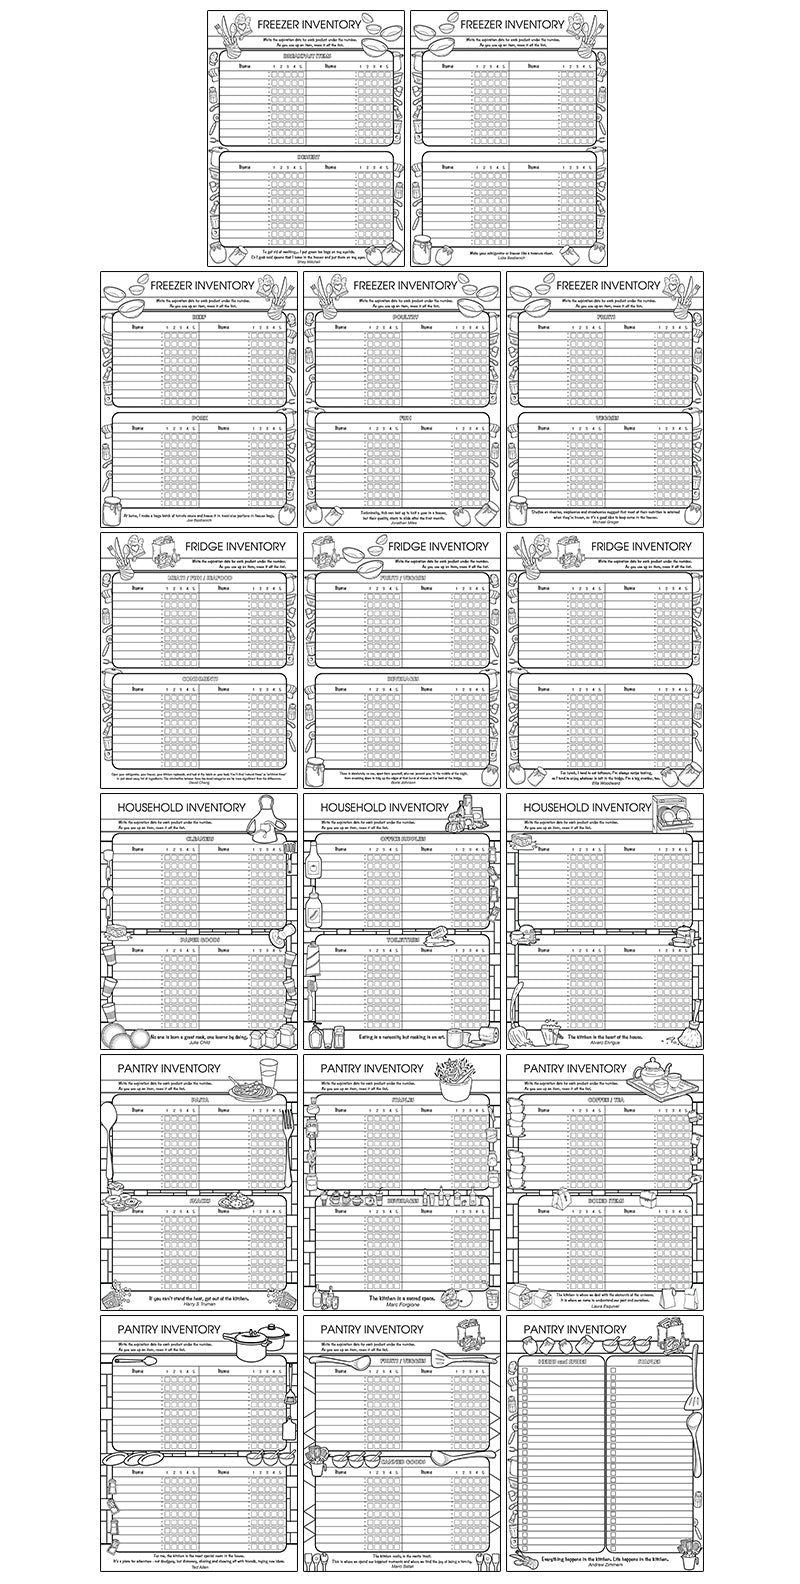 Pantry Supply Planner Journal - Printable PDF Coloring Book